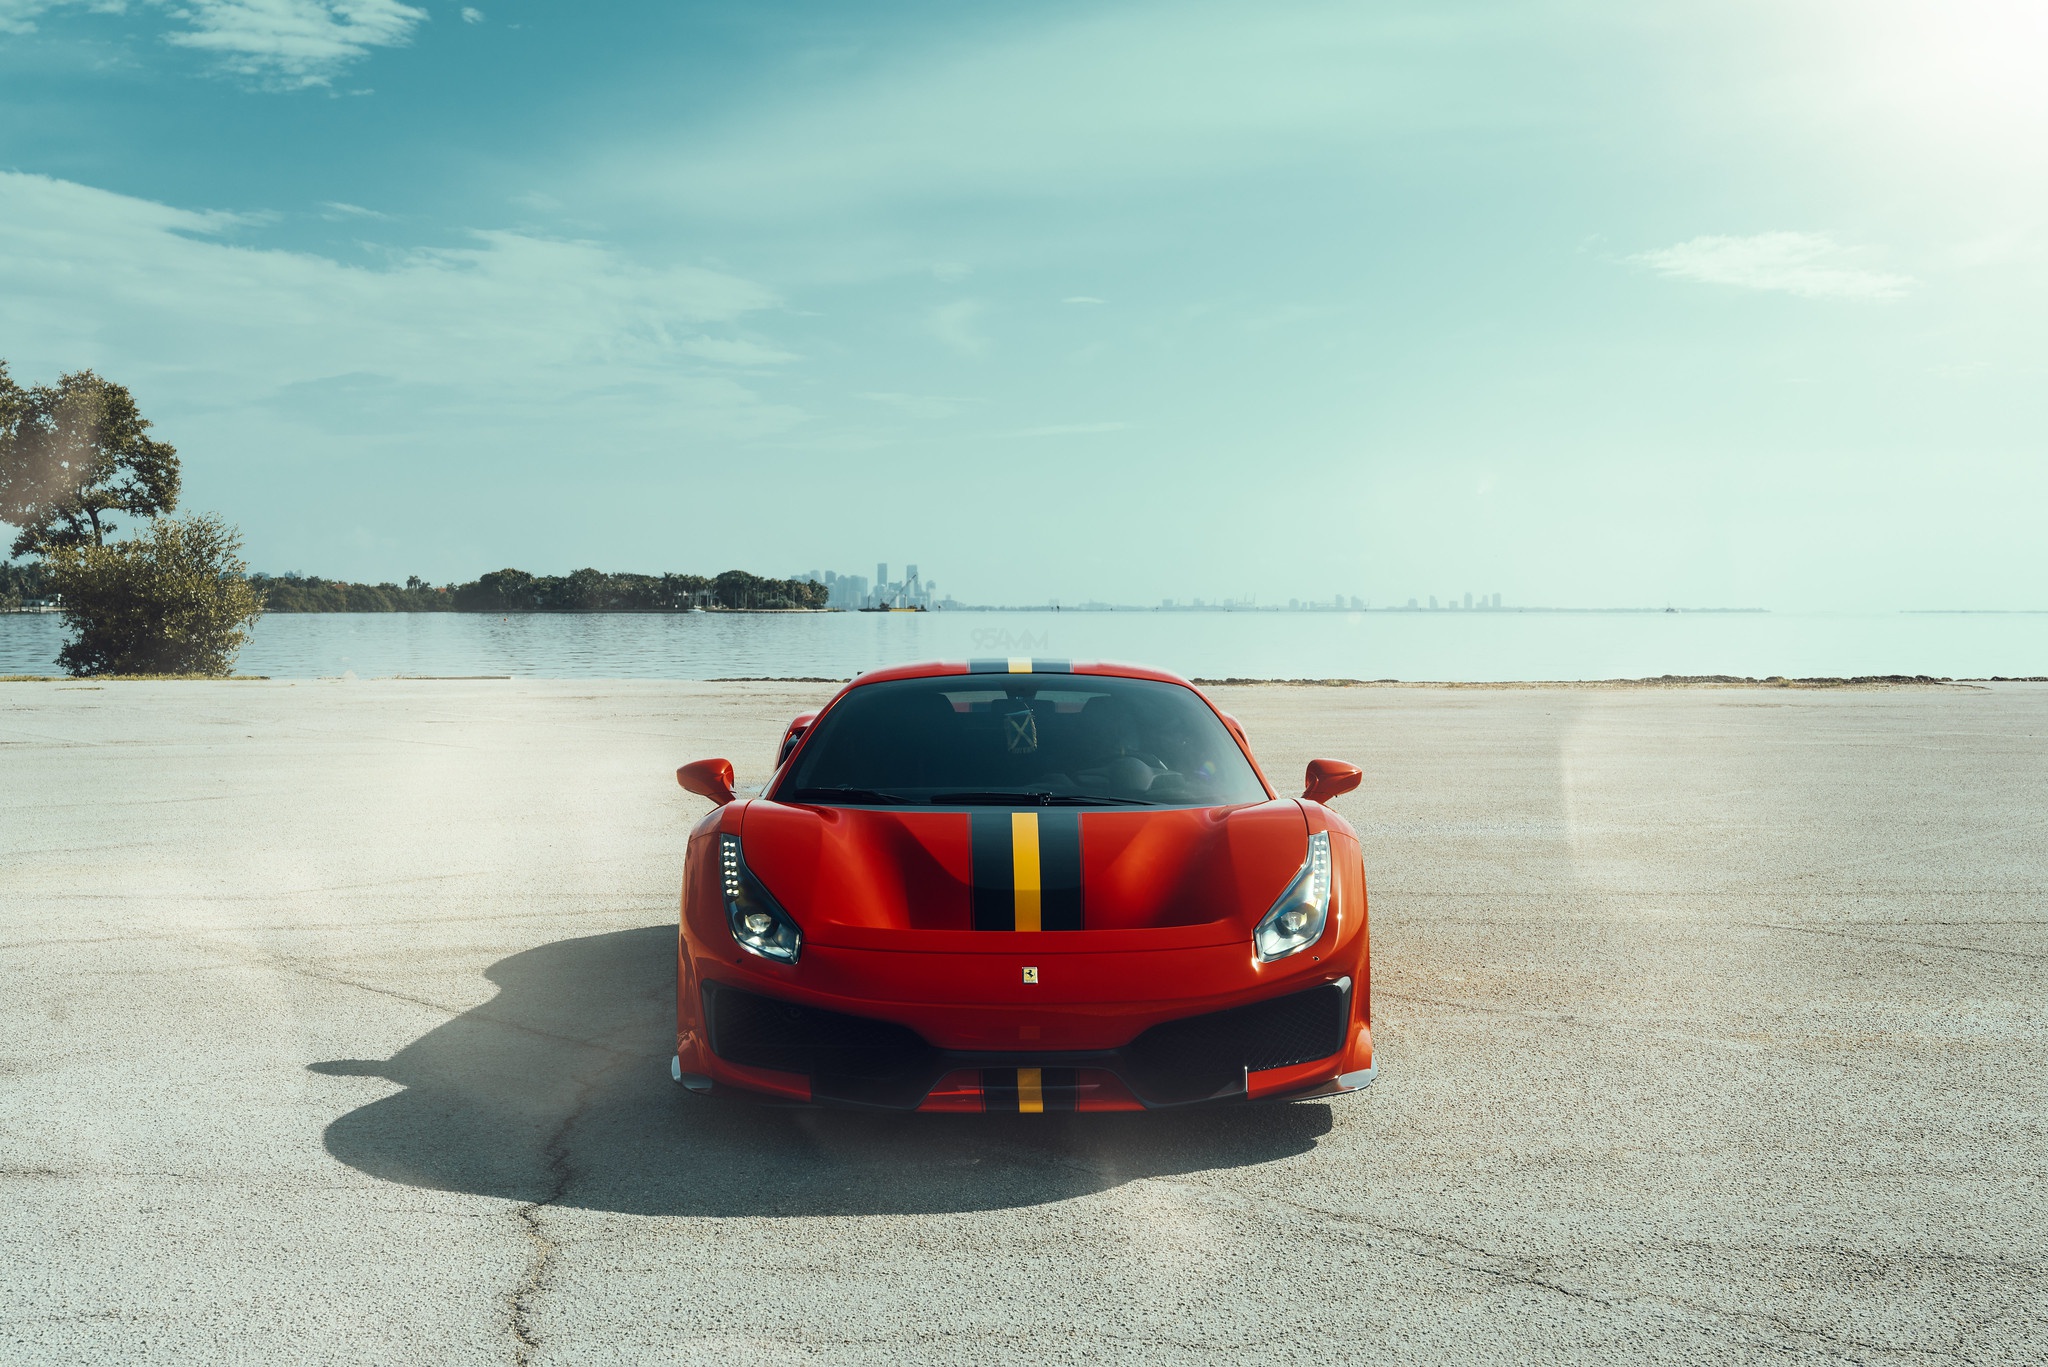 Vehicles Ferrari 488 Pista HD Wallpaper | Background Image